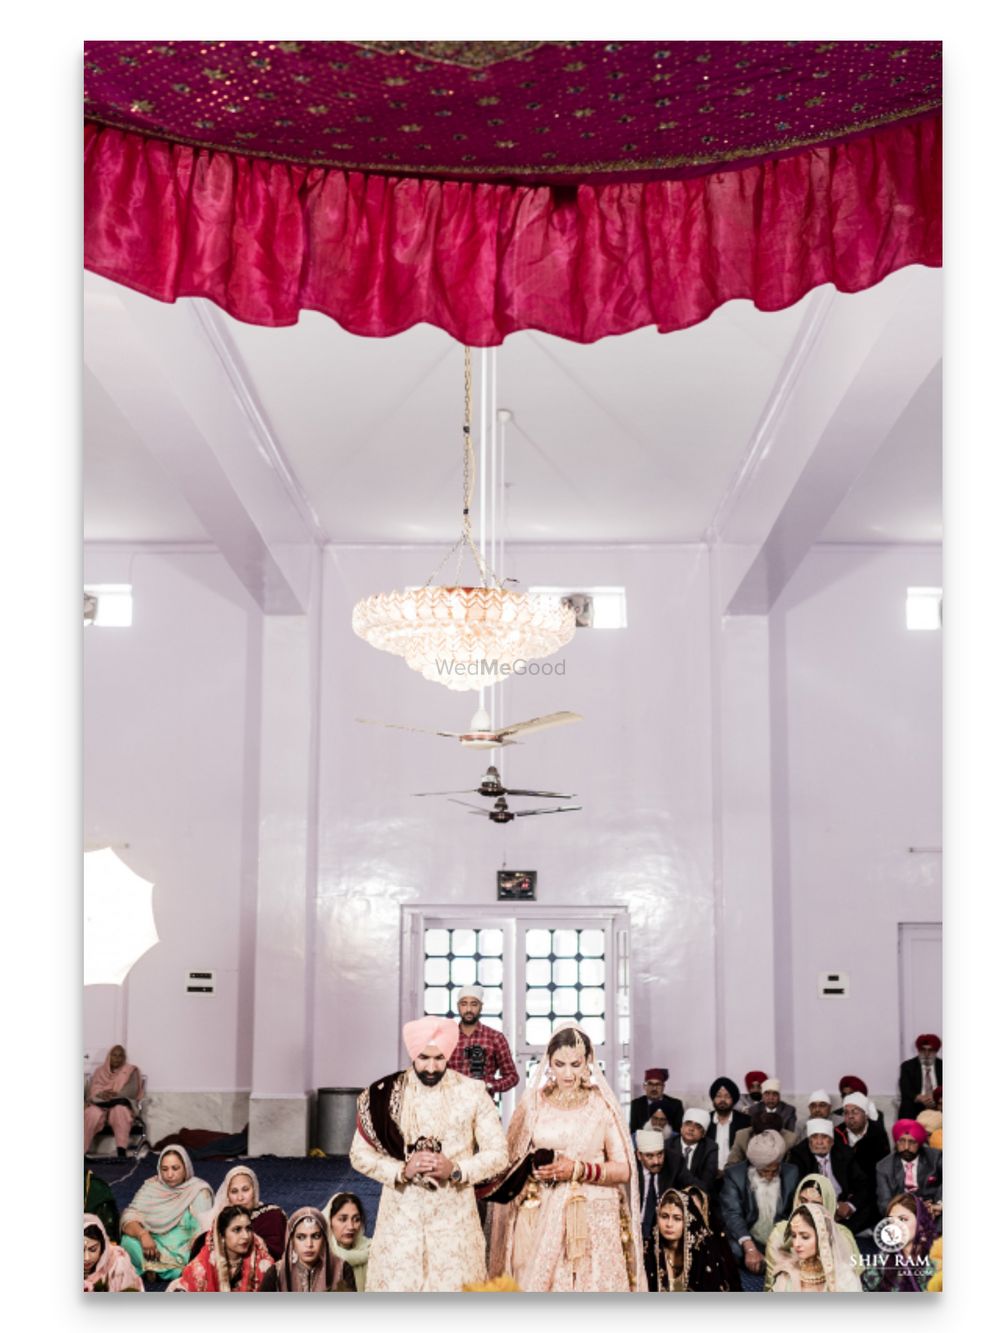 Photo From Royal Sikh Wedding Punjab - By Shiv Ram Lazor Lab